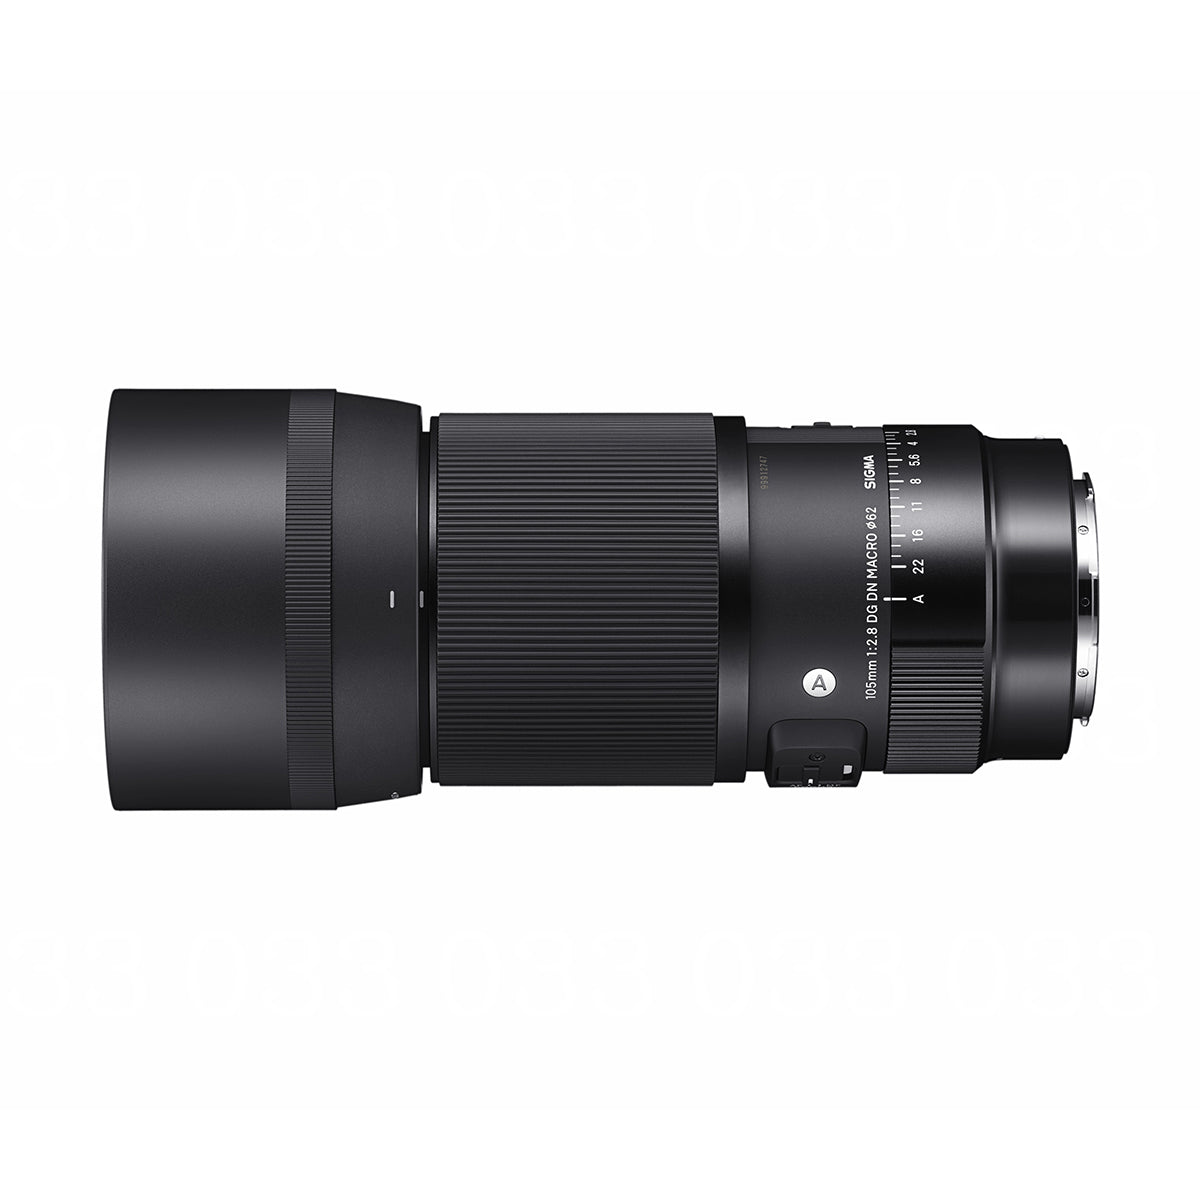 Sigma 105mm f/2.8 DG DN Macro ART Lens for Leica / Panasonic L-Mount